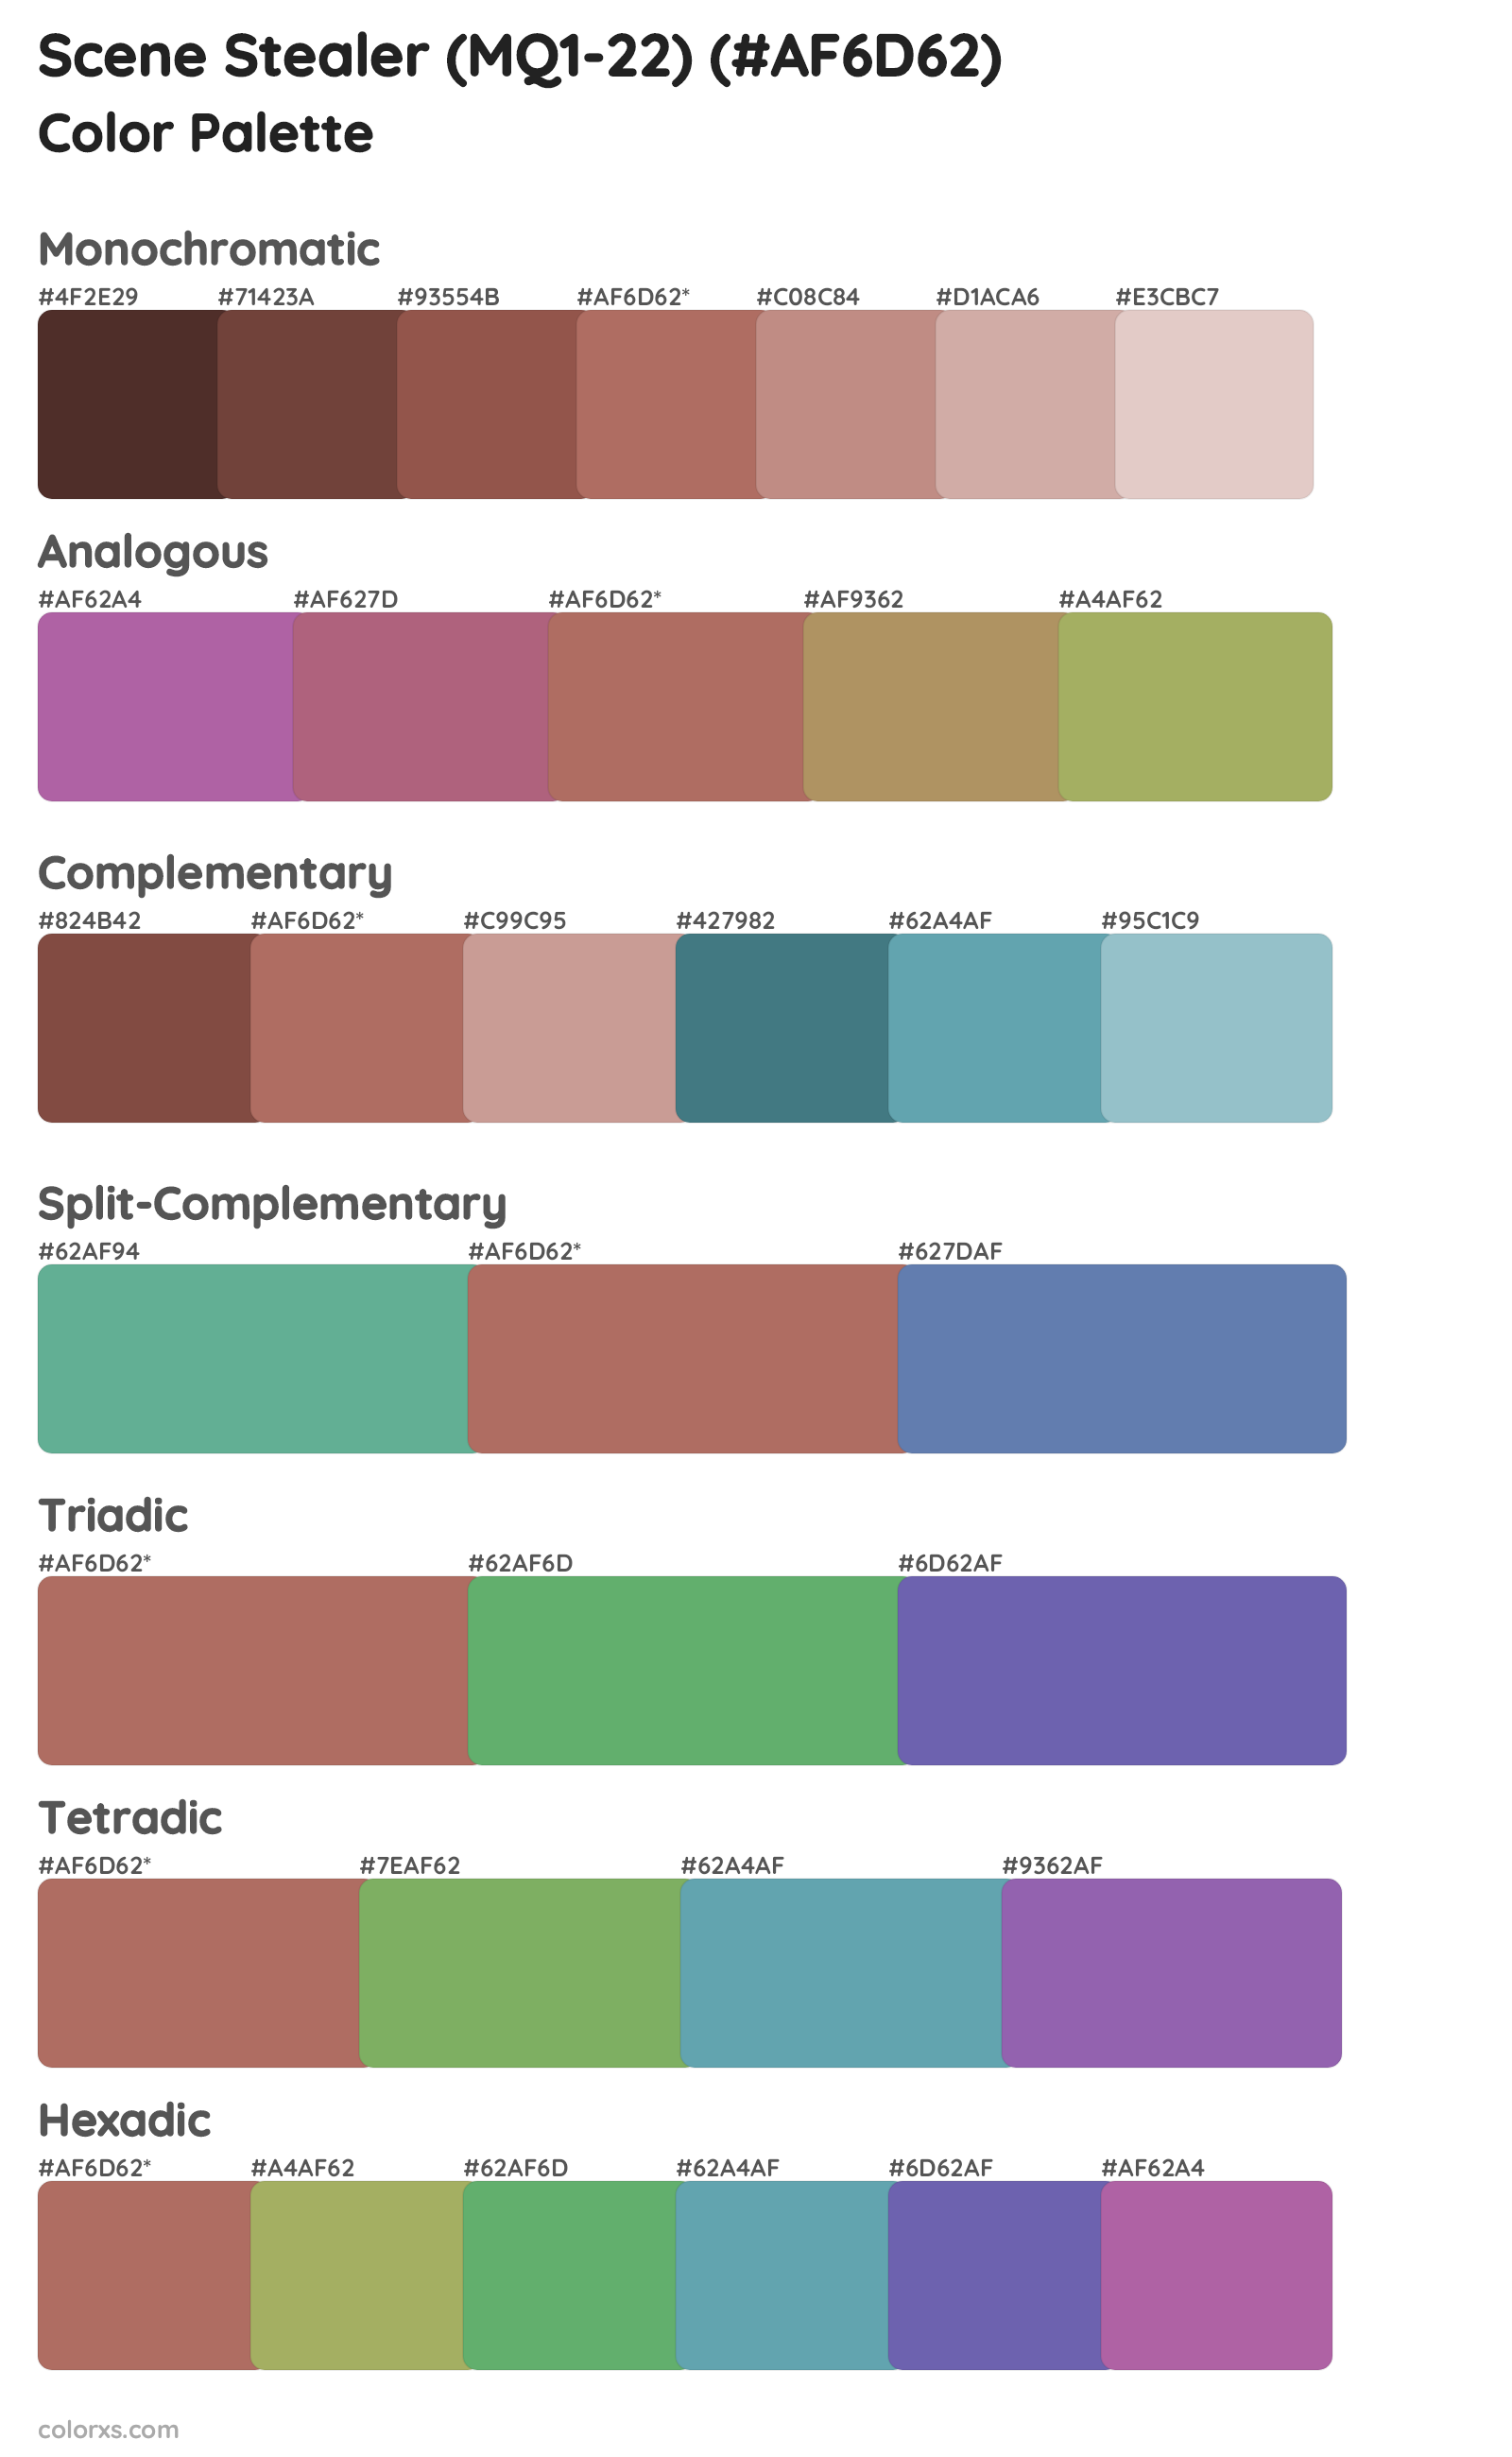 Scene Stealer (MQ1-22) Color Scheme Palettes